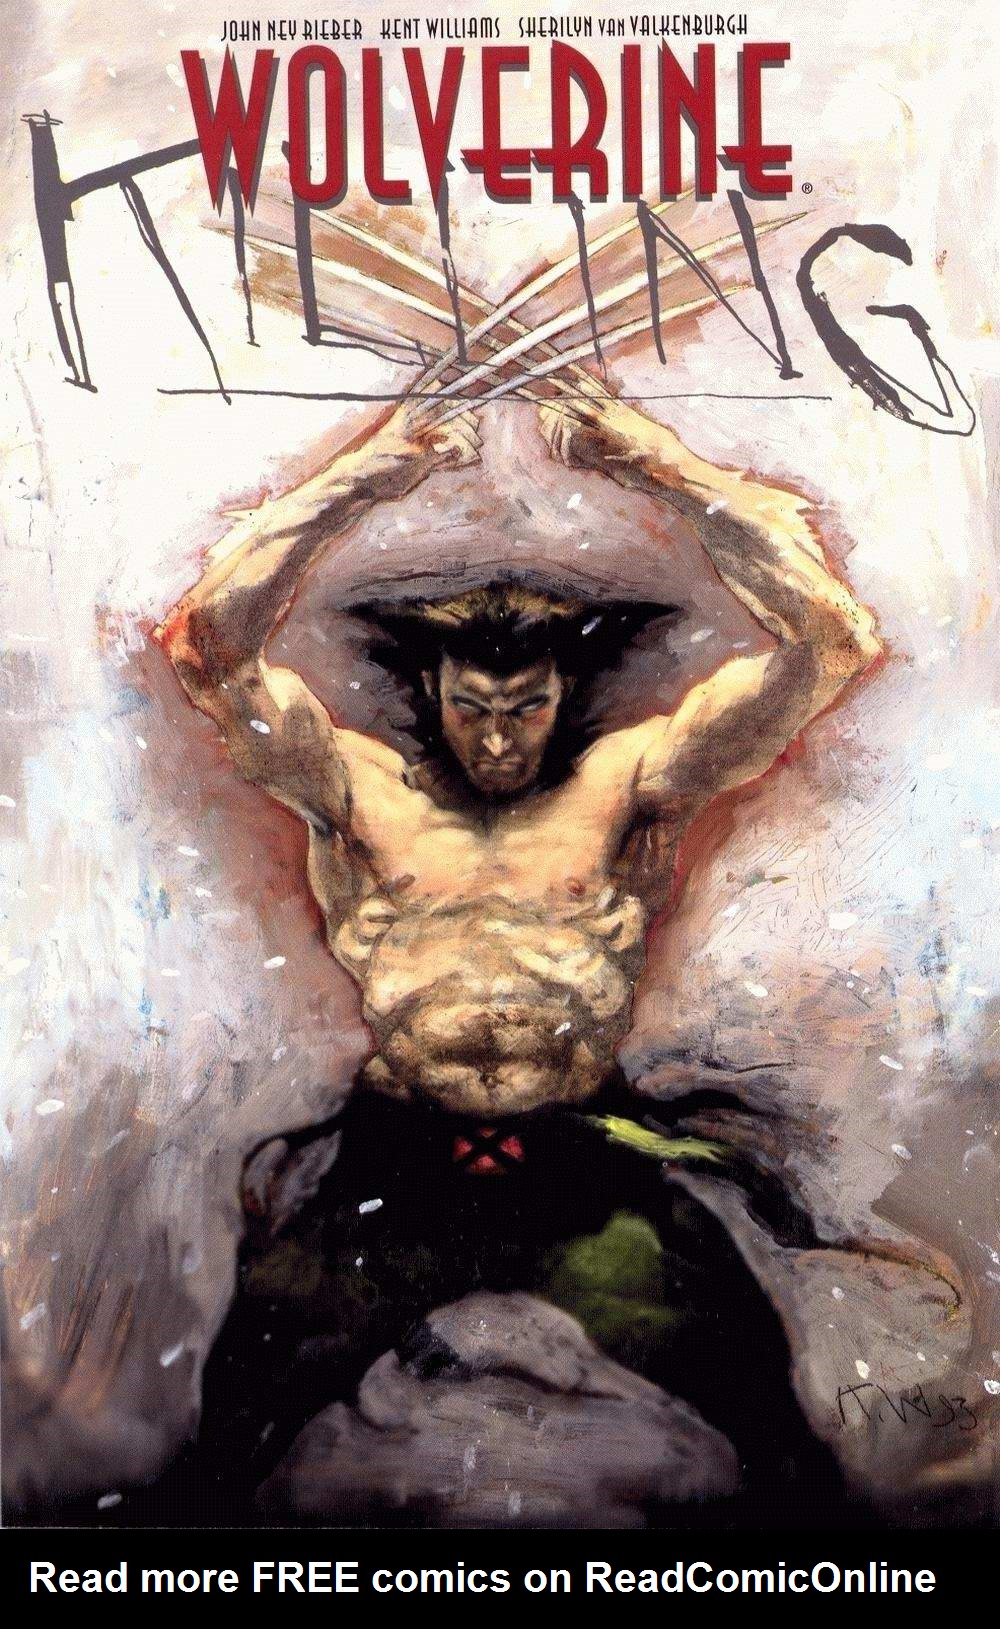 Read online Wolverine: Killing comic -  Issue # Full - 2